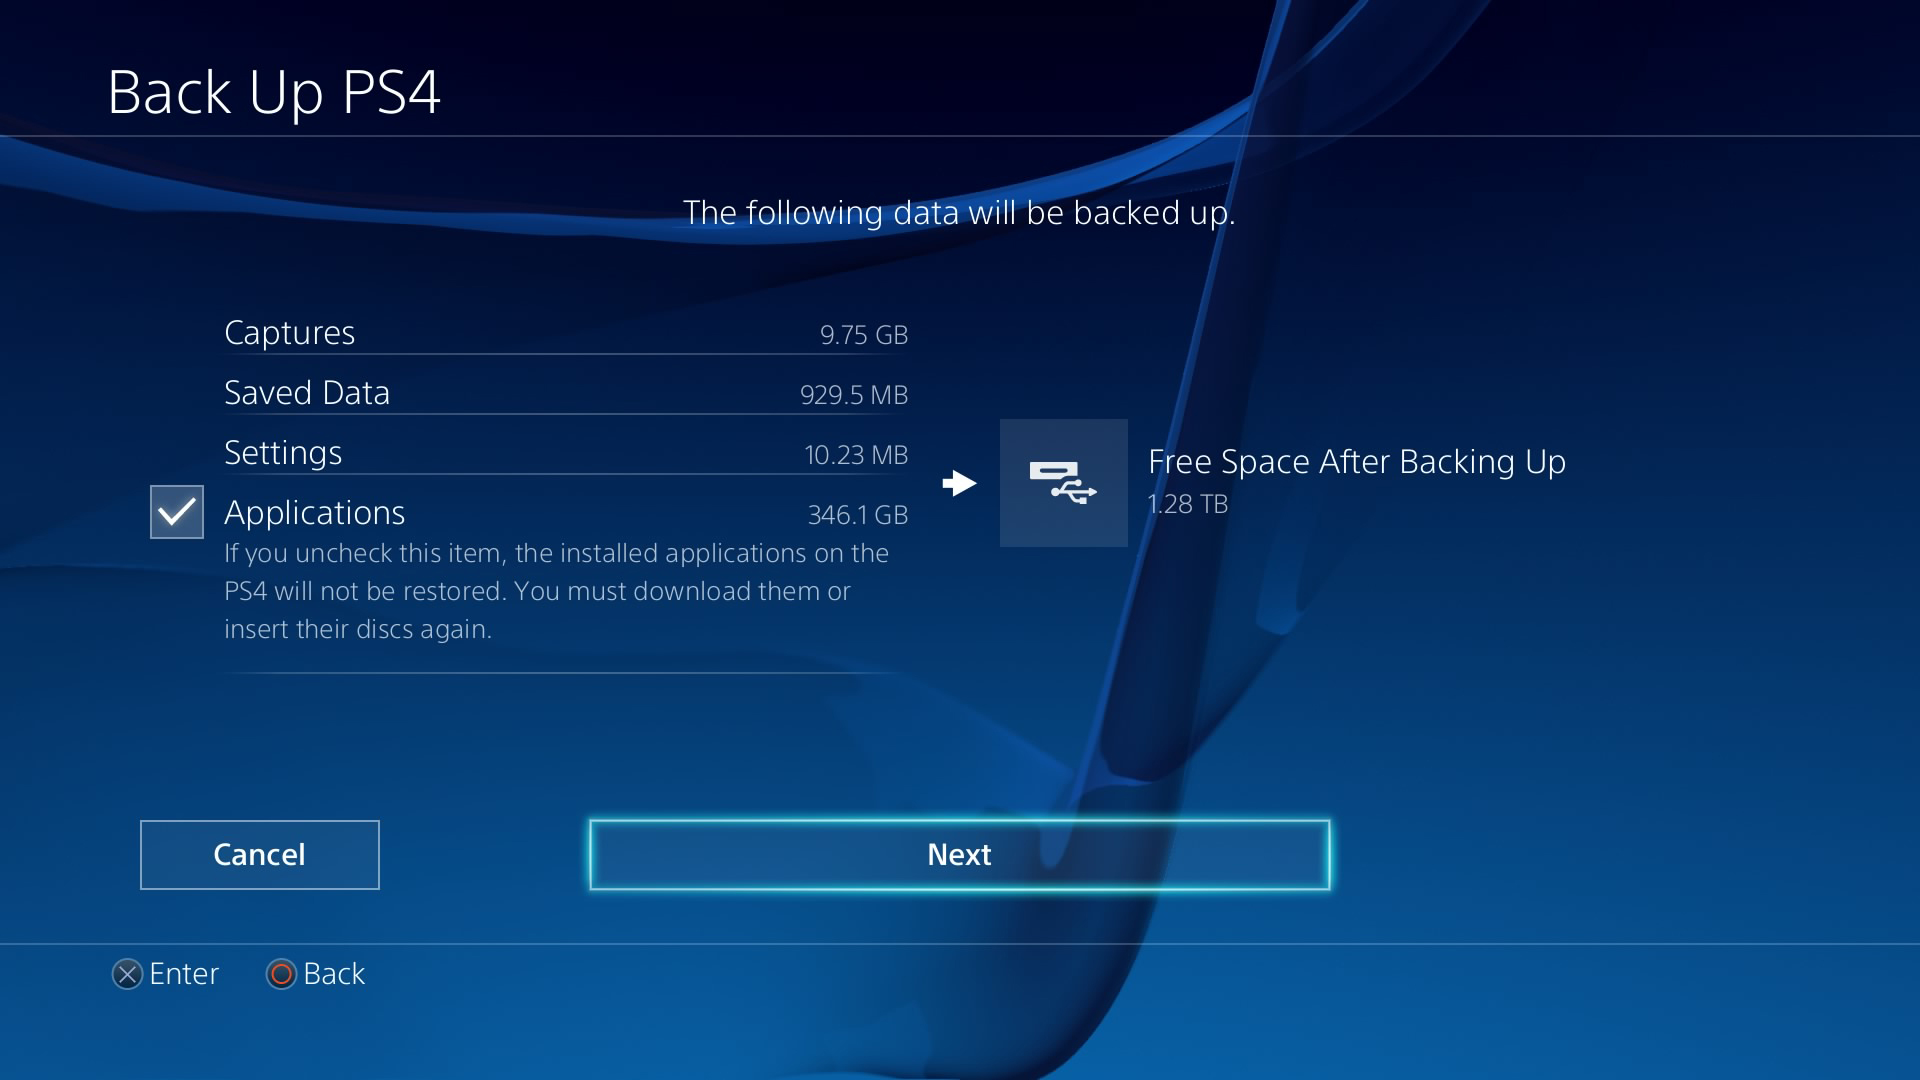 PS4 Back Up Options 1TB Hard Drive Upgrade